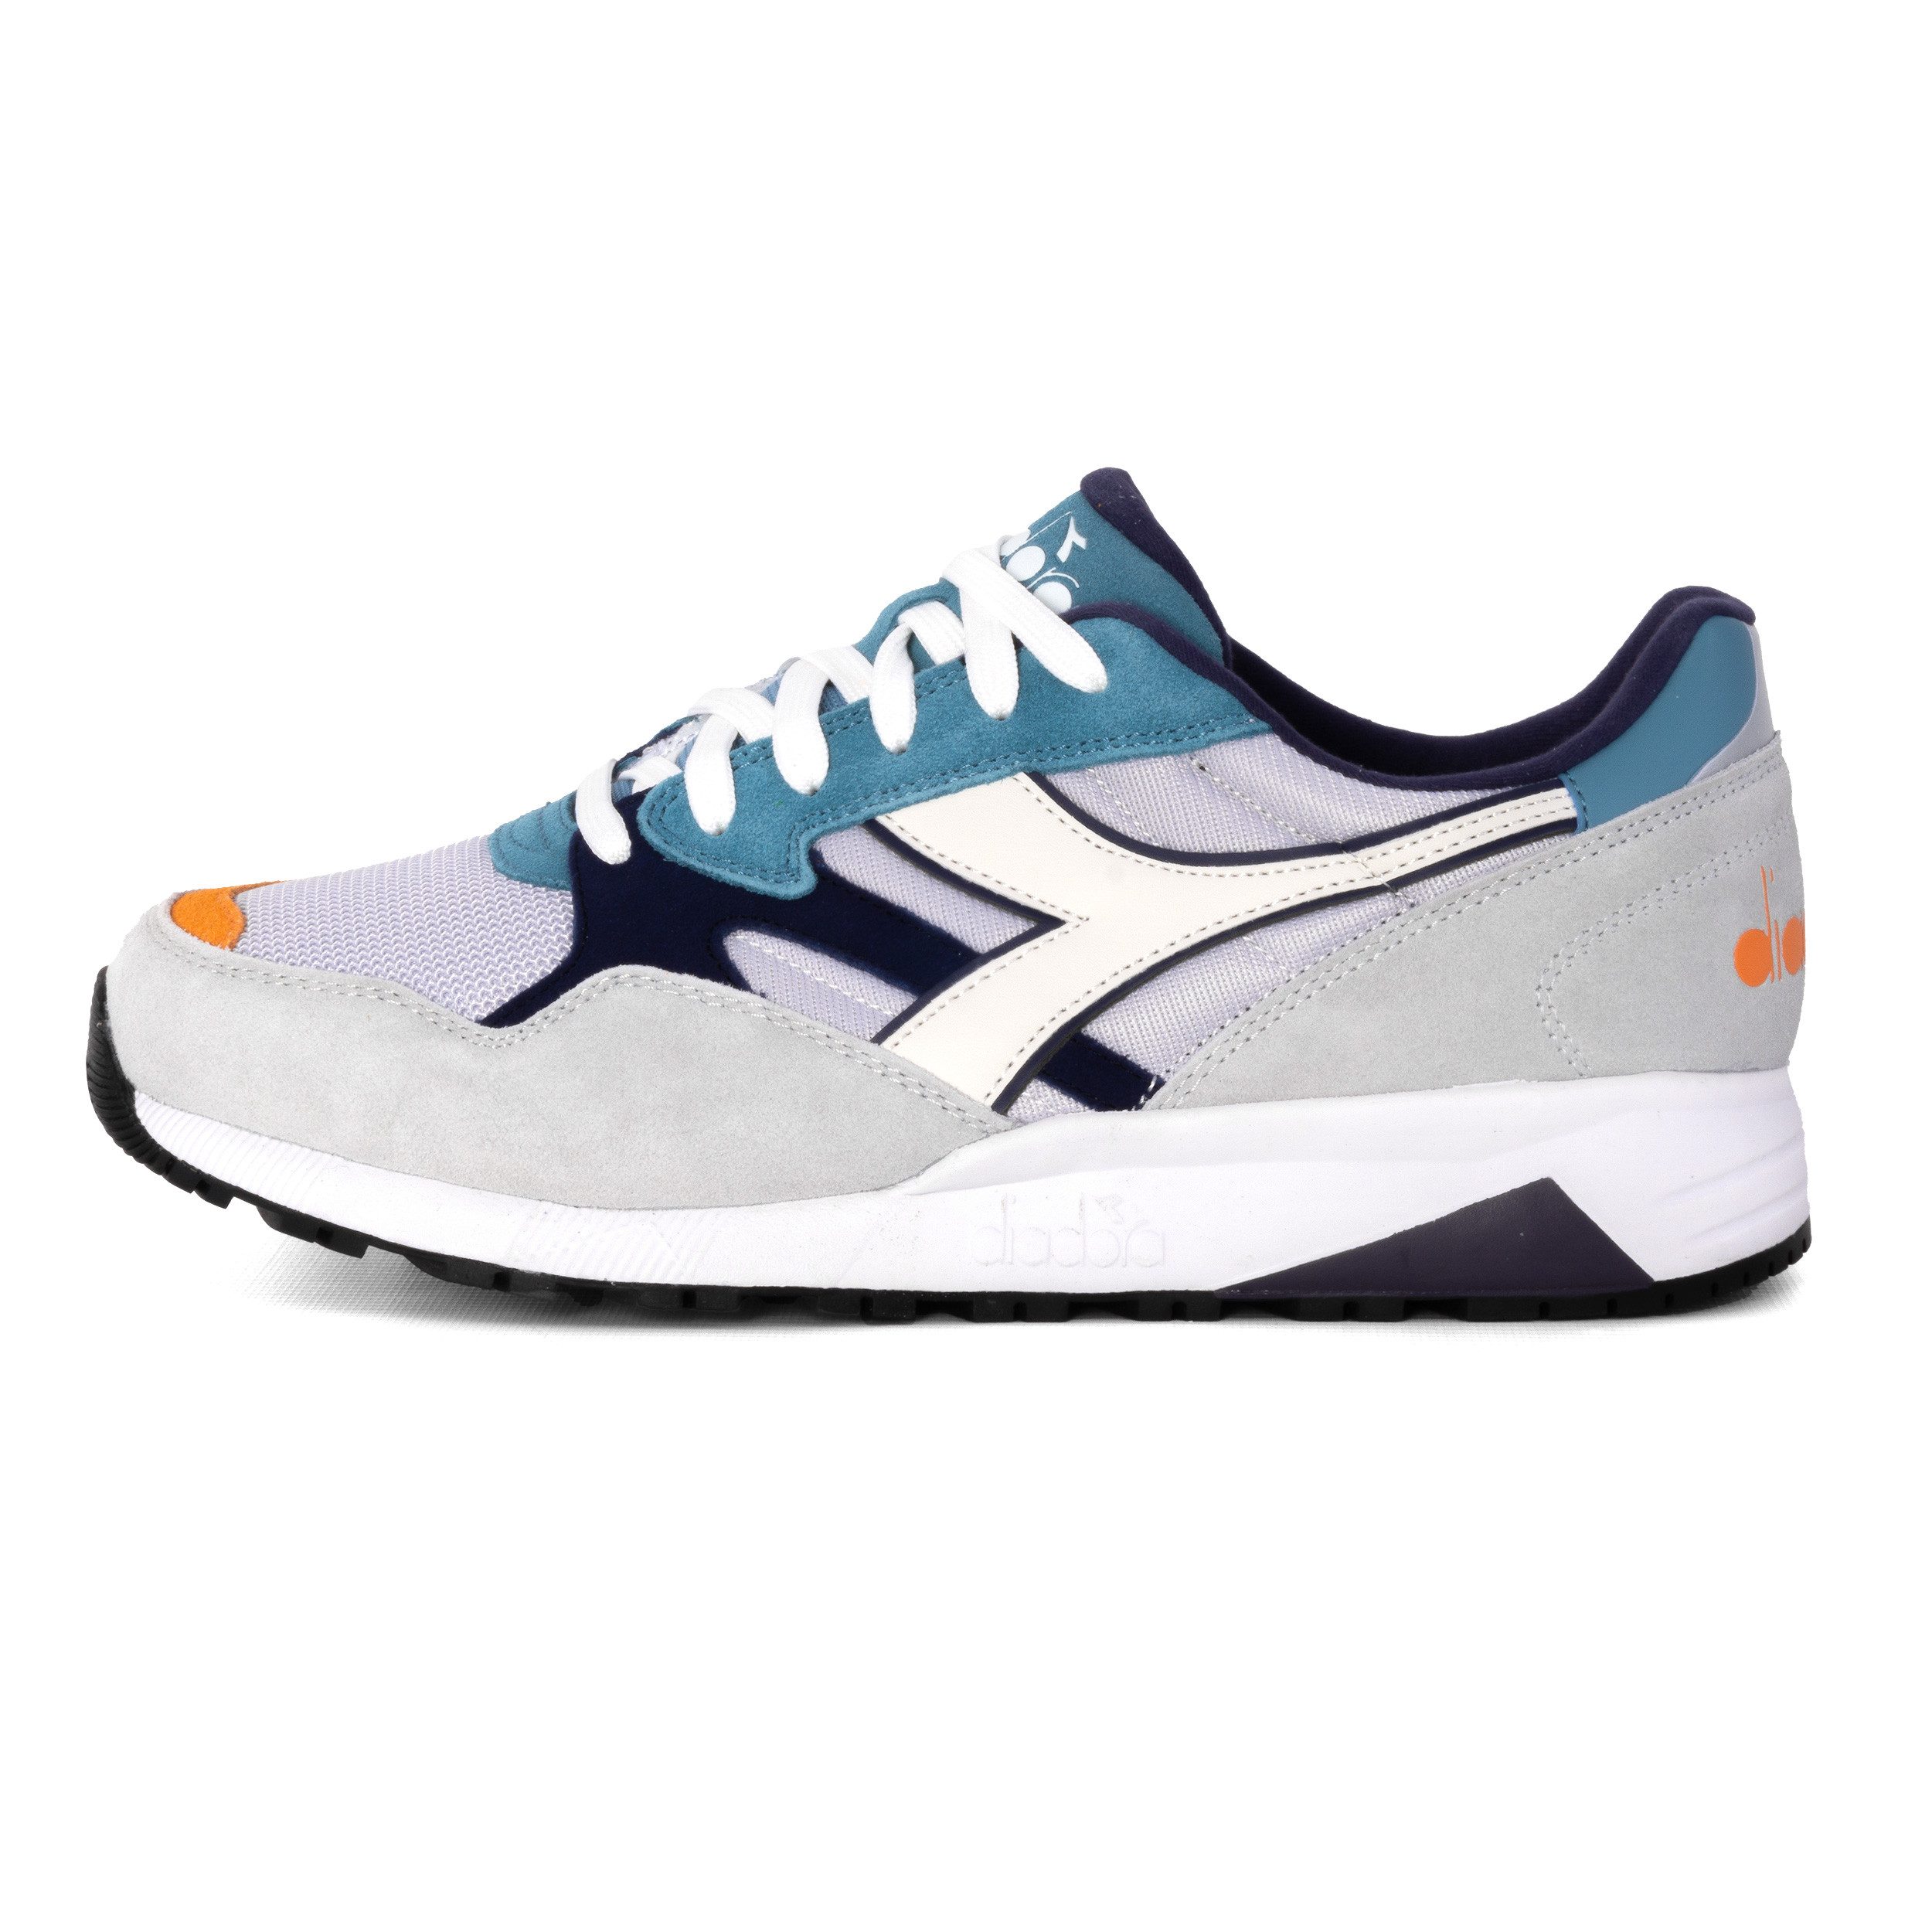 Diadora Schuhe diadora N 902, G 44, F grey/ blue Sneaker